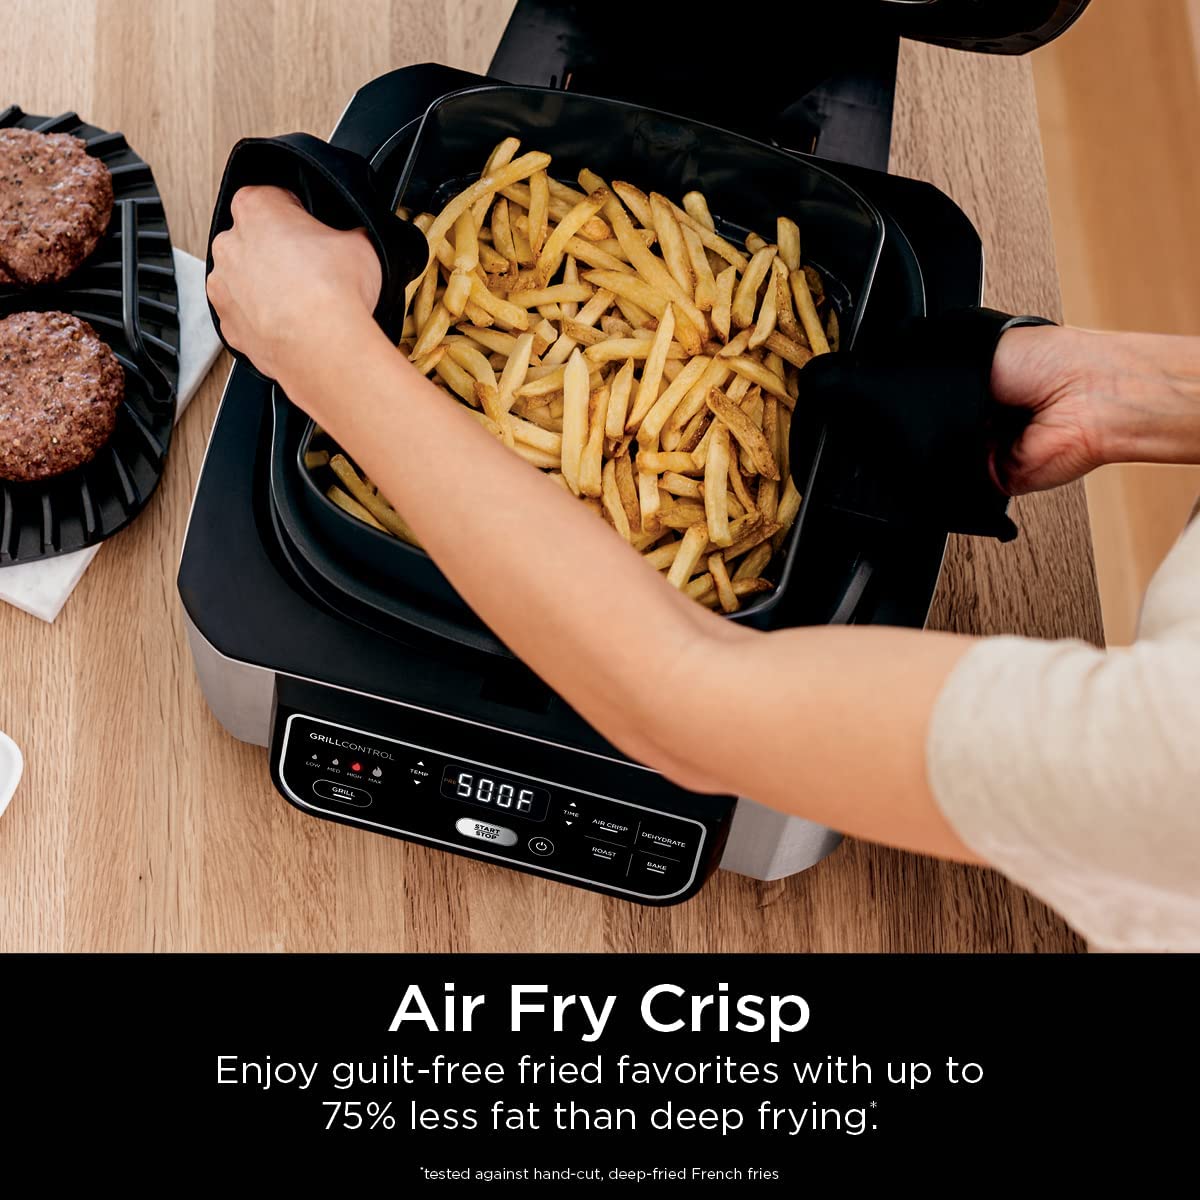 https://kitchenteller.com/wp-content/uploads/2022/10/Guilt-free-air-fry-crisp-Ninja-Foodi-5-in-1-Indoor-Grill-with-Air-Fryer-Review.jpg